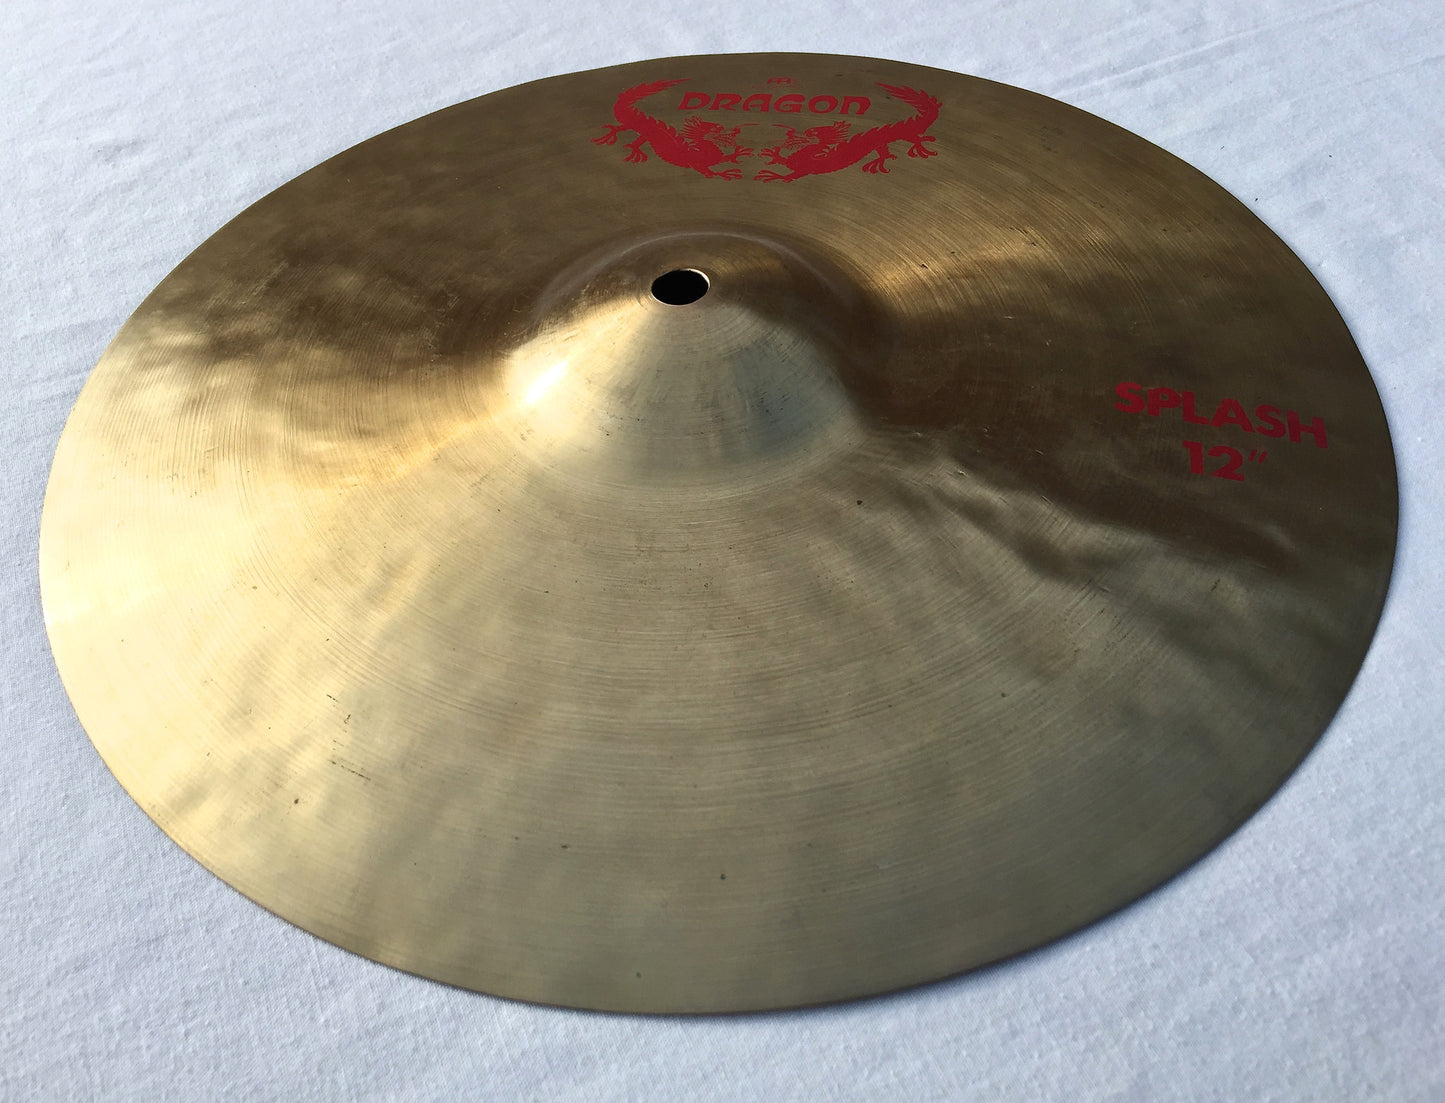 12" Meinl Dragon Splash Cymbal 642g - Inventory # 149